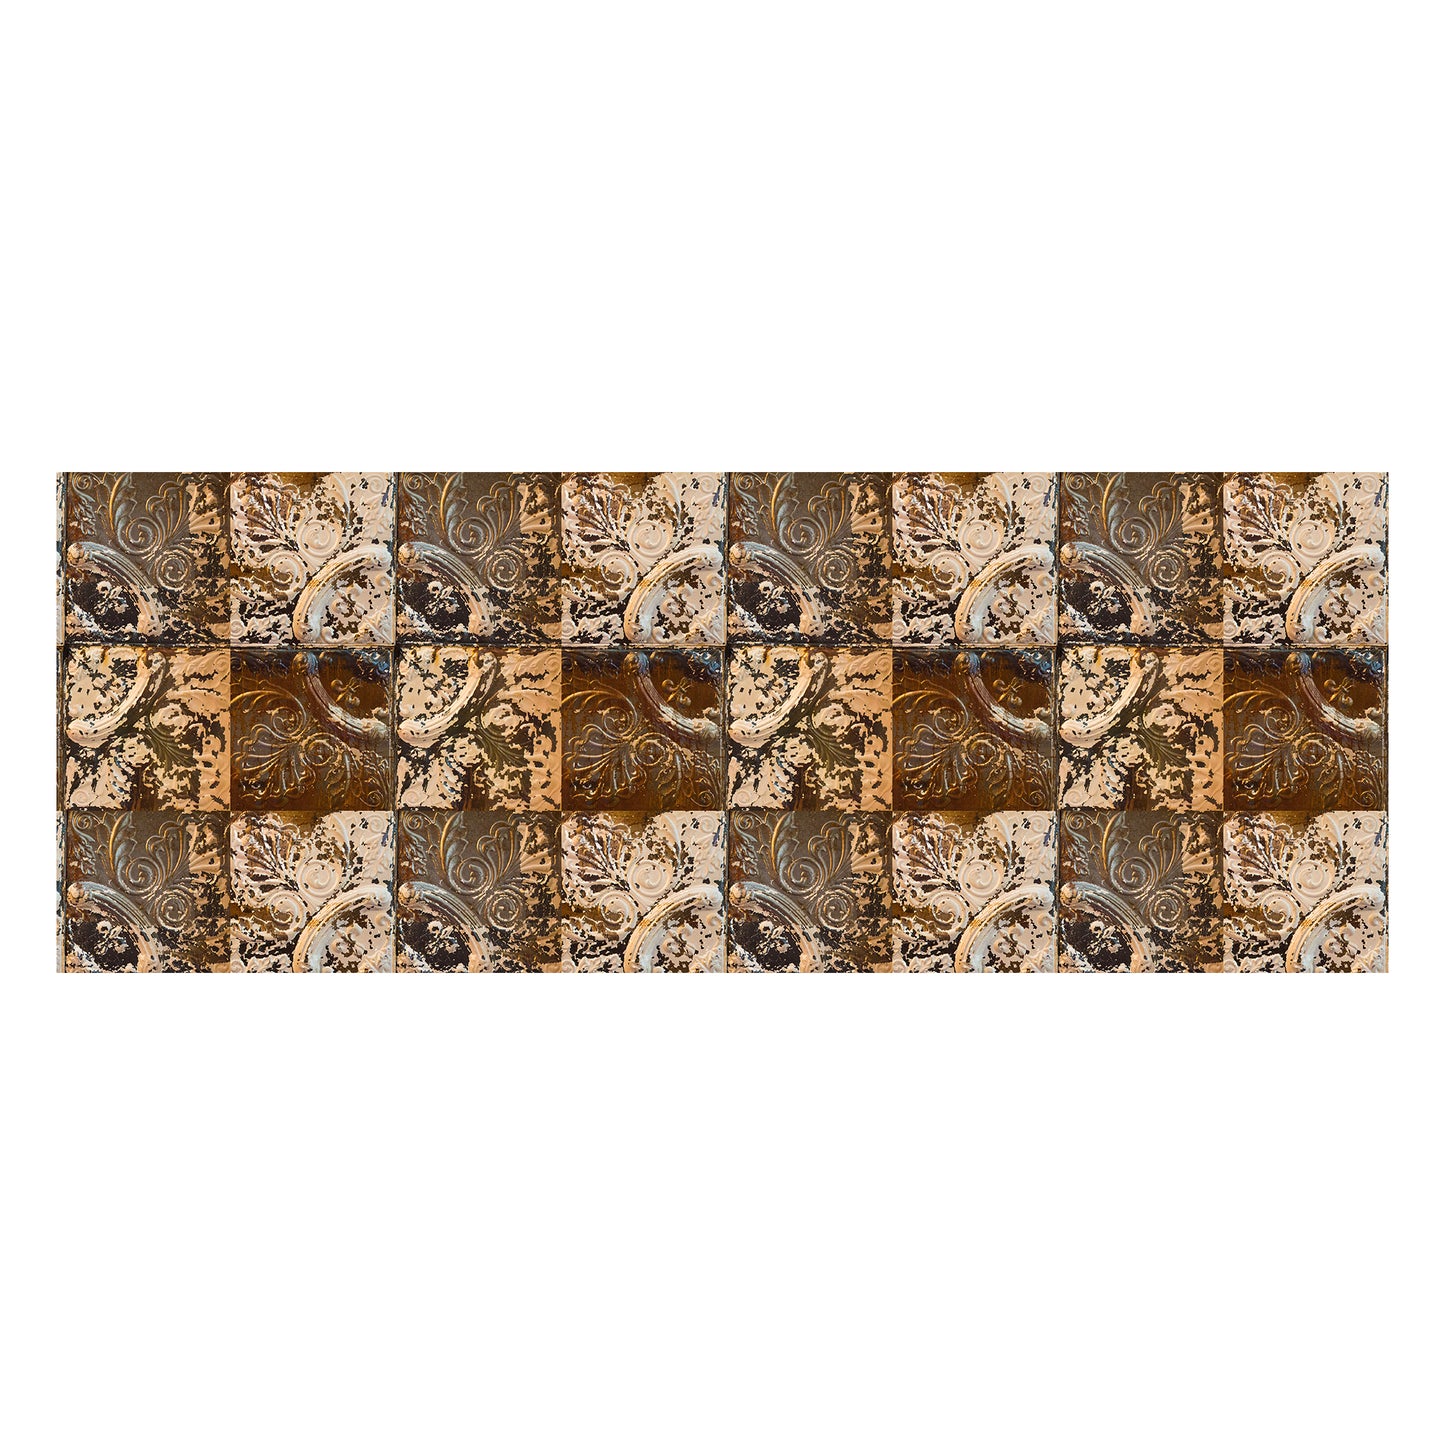 Rustic Metallic Tile Pattern Decoupage Drum Cover